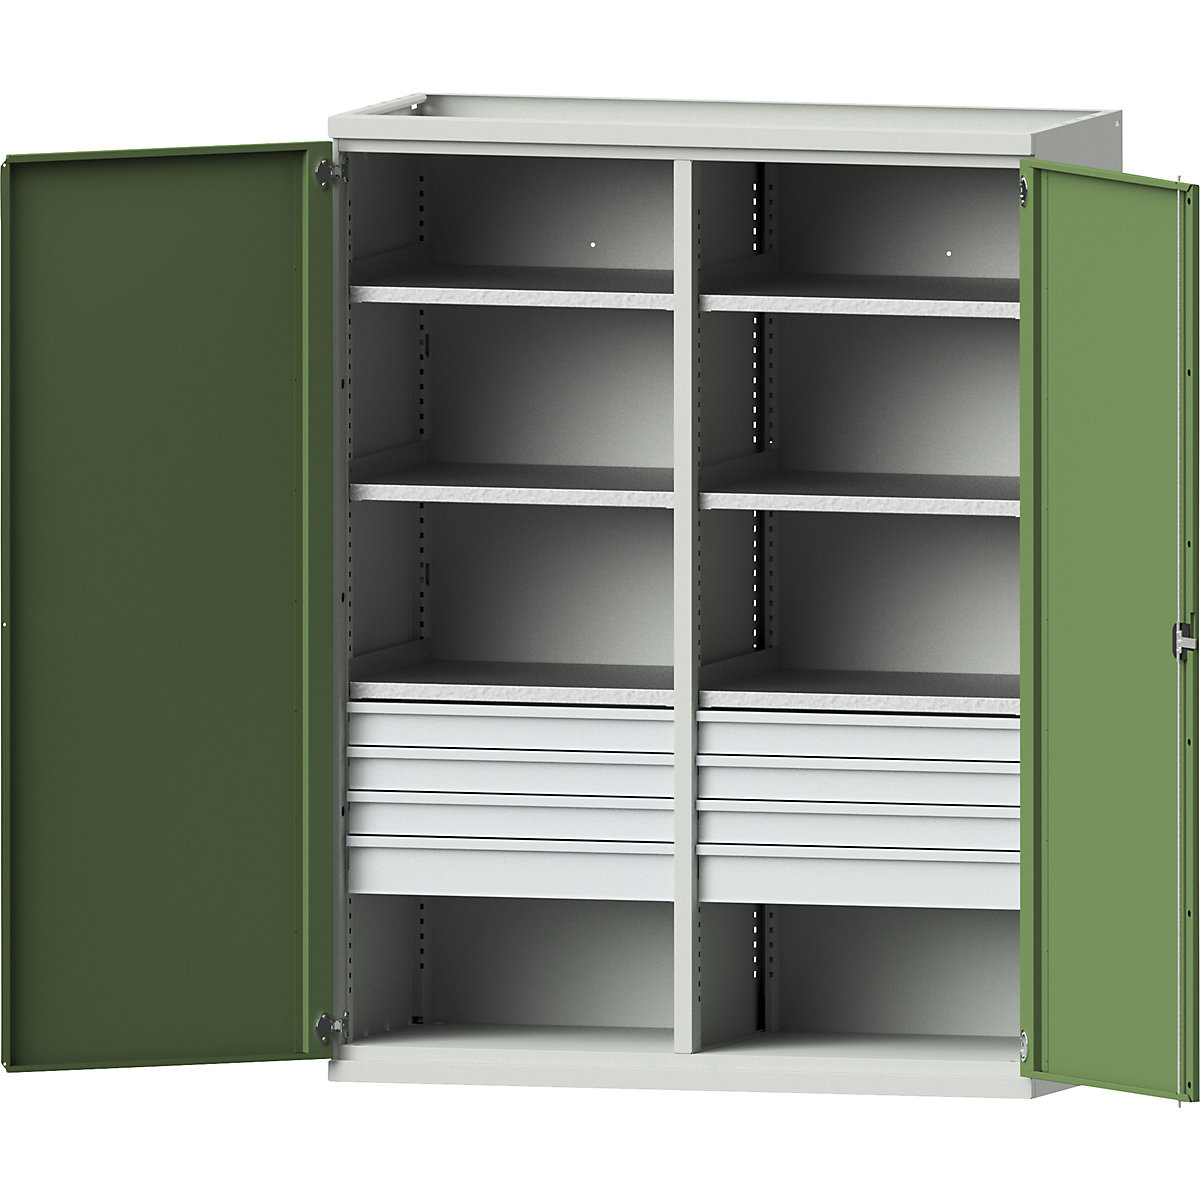 JUMBO heavy duty cupboard made of sheet steel – eurokraft pro, 6 shelves, drawers 6 x 90 mm, 2 x 120 mm high, light grey / reseda green-2